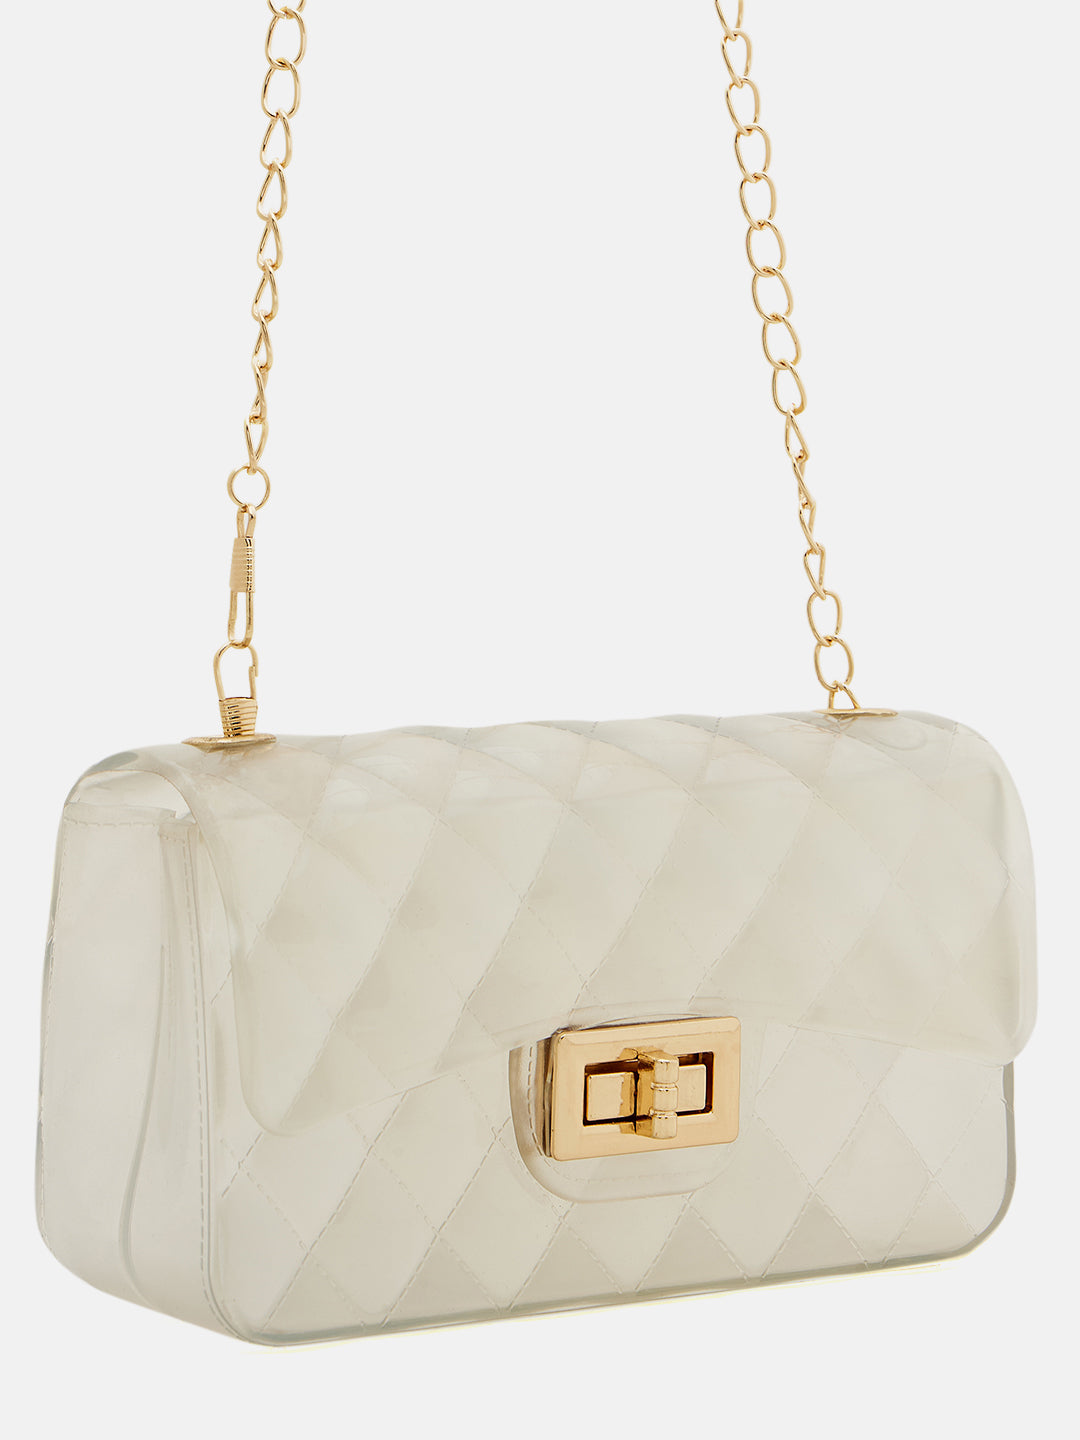 Athena White Textured PU Structured Sling Bag - Athena Lifestyle